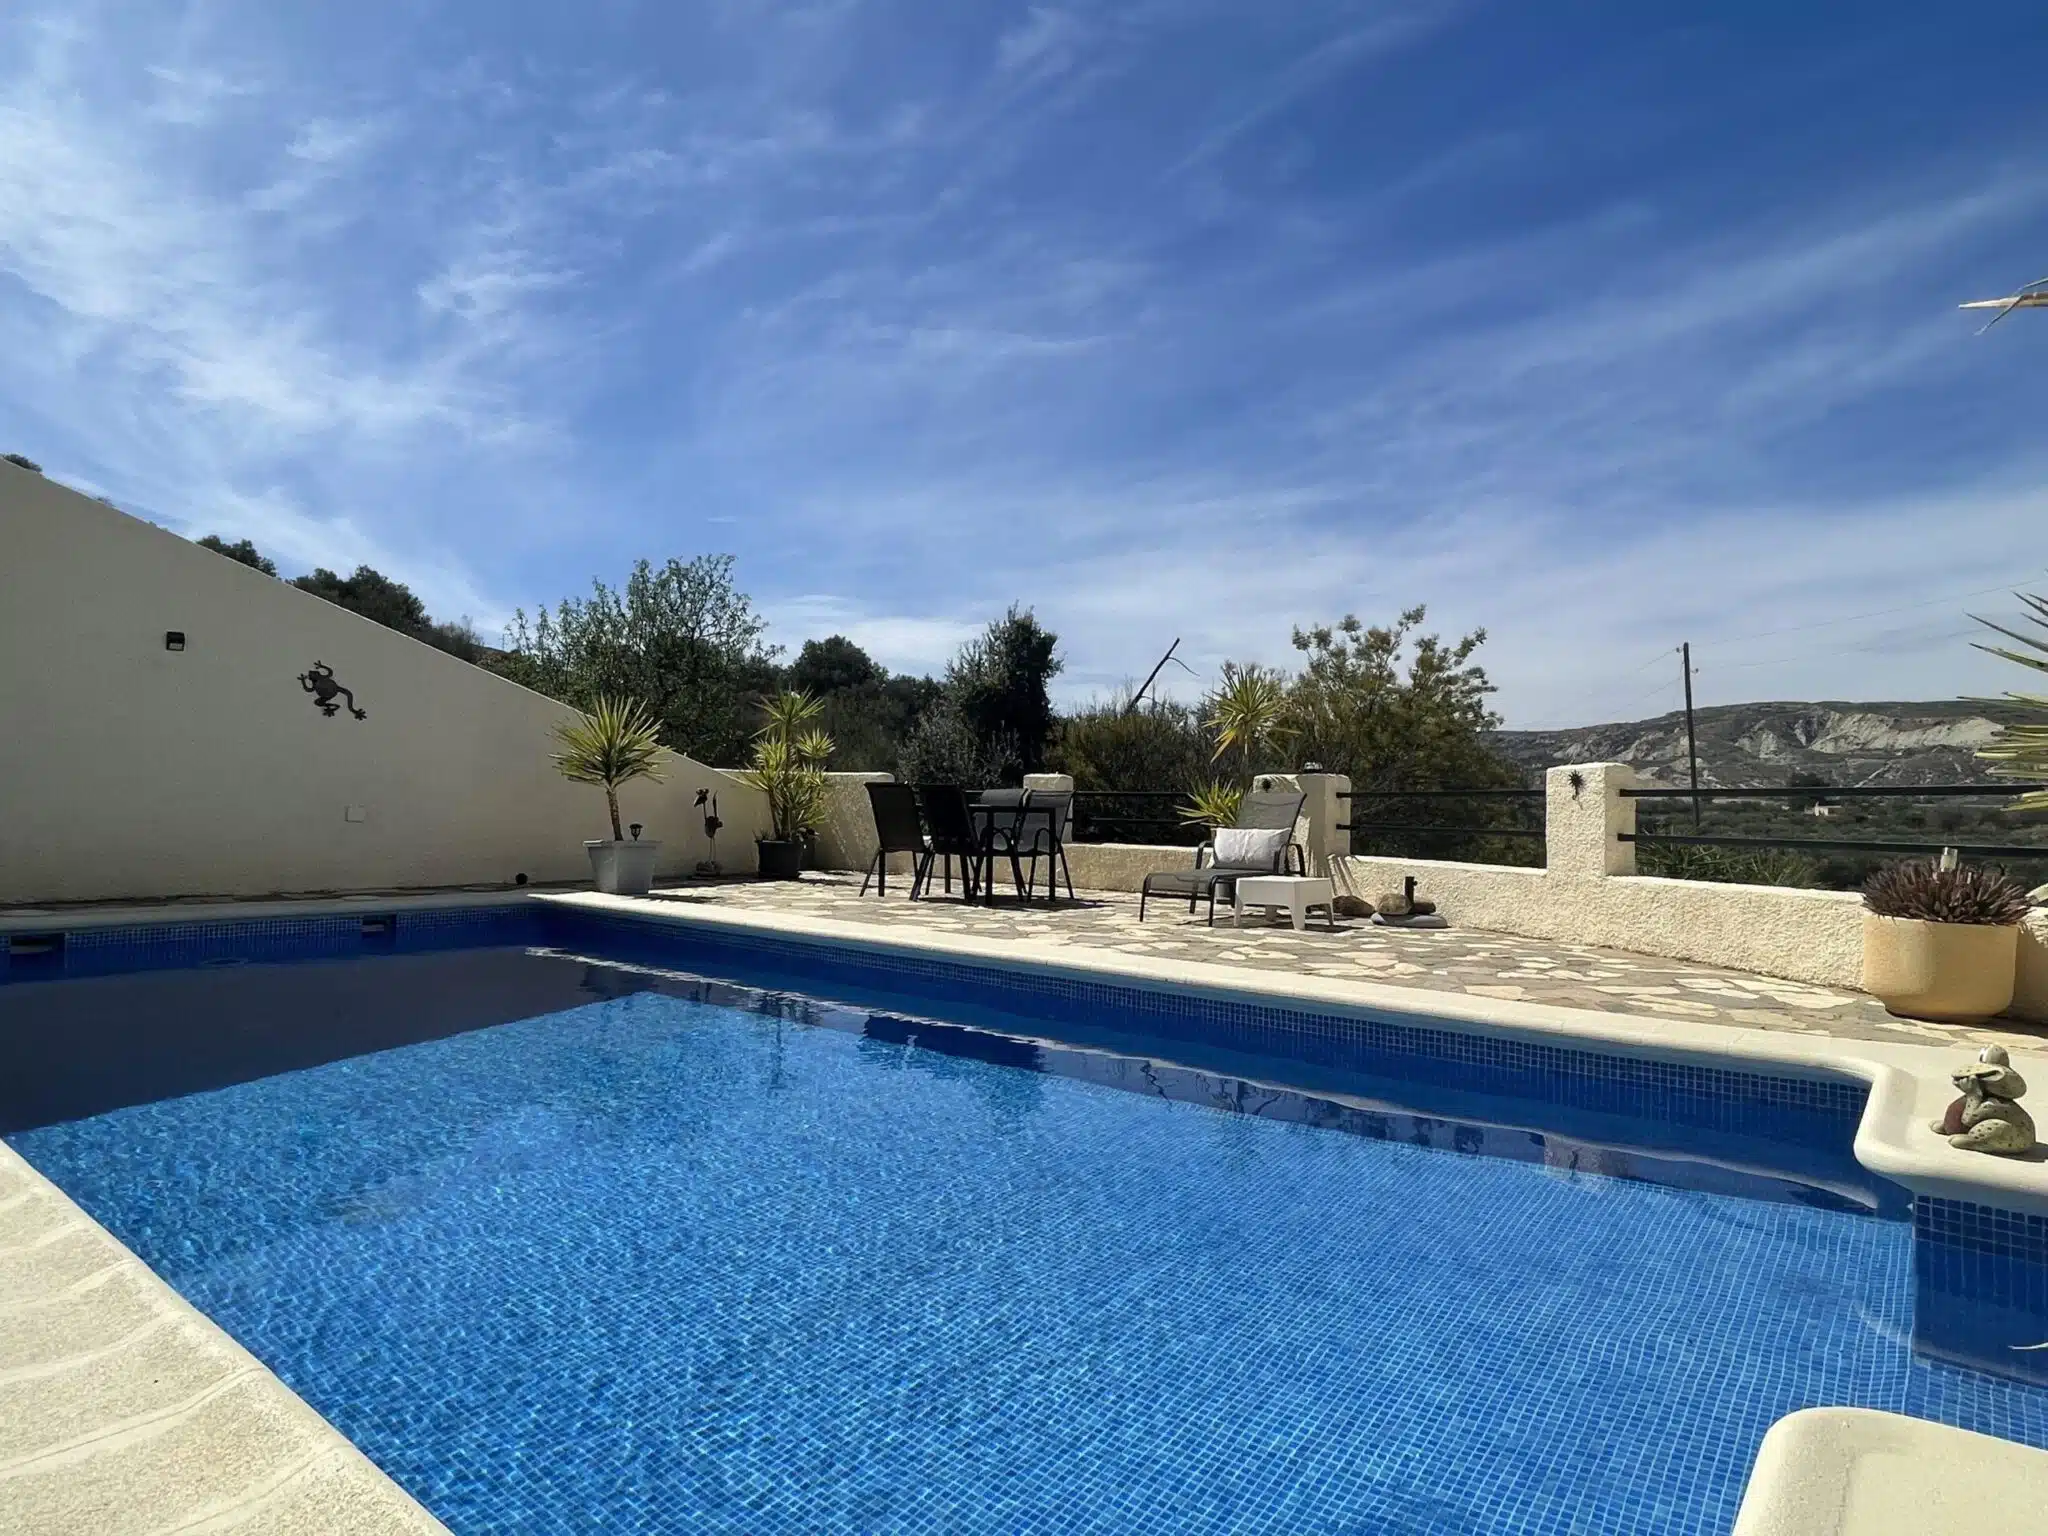 Resale Villa Te koop in Sorbas in Spanje, gelegen aan de Costa de Almería